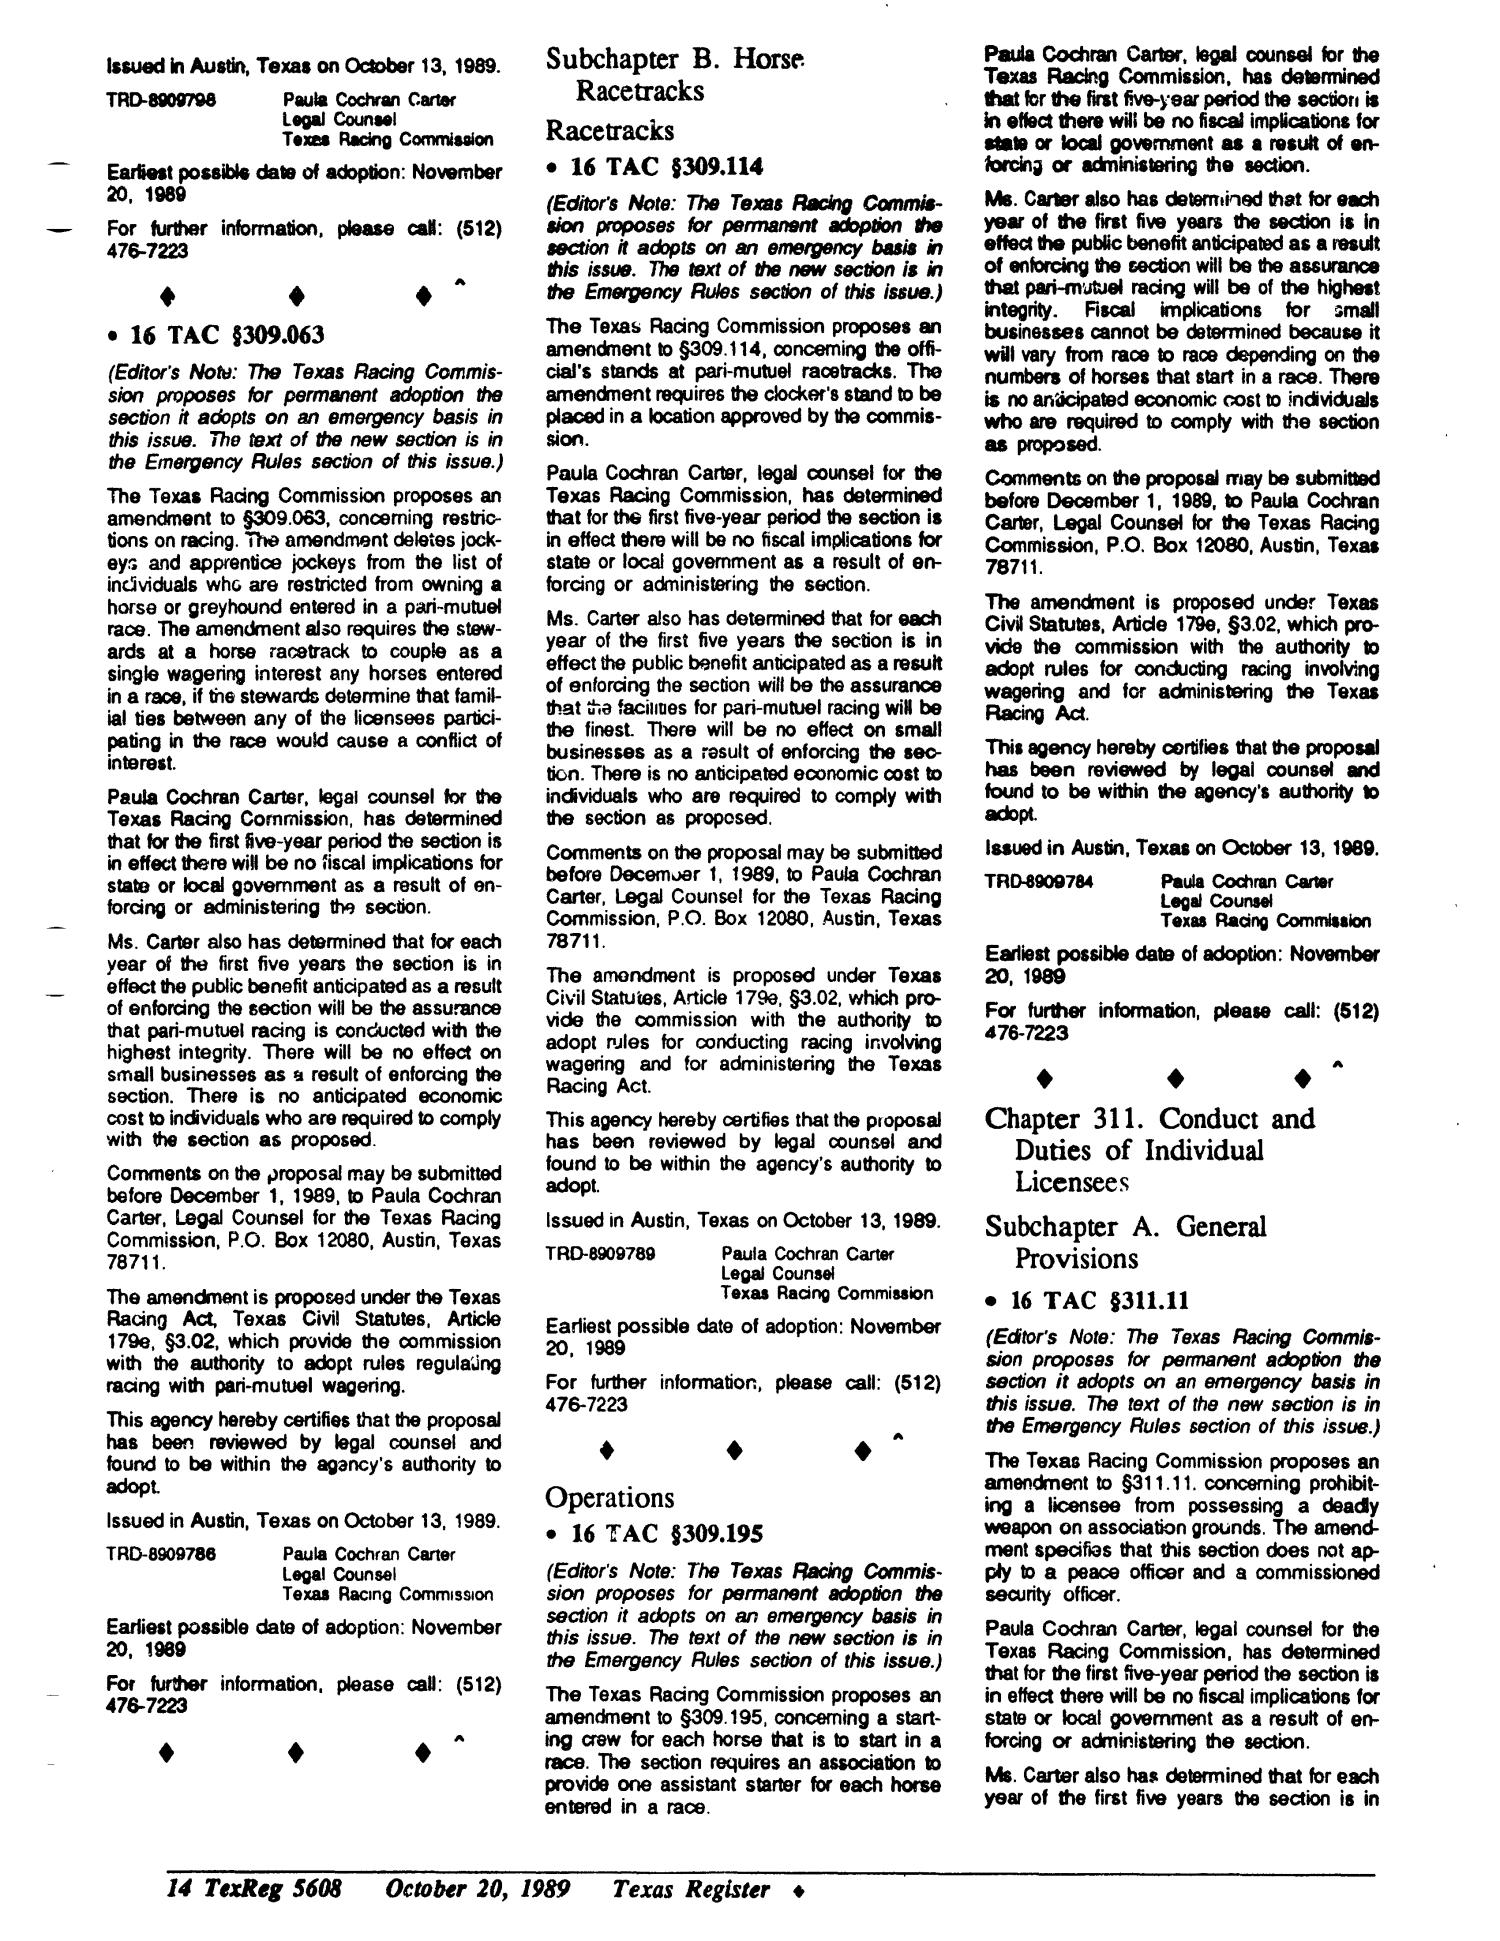 Texas Register, Volume 14, Number 78, Pages 5585-5650, October 20, 1989
                                                
                                                    5608
                                                